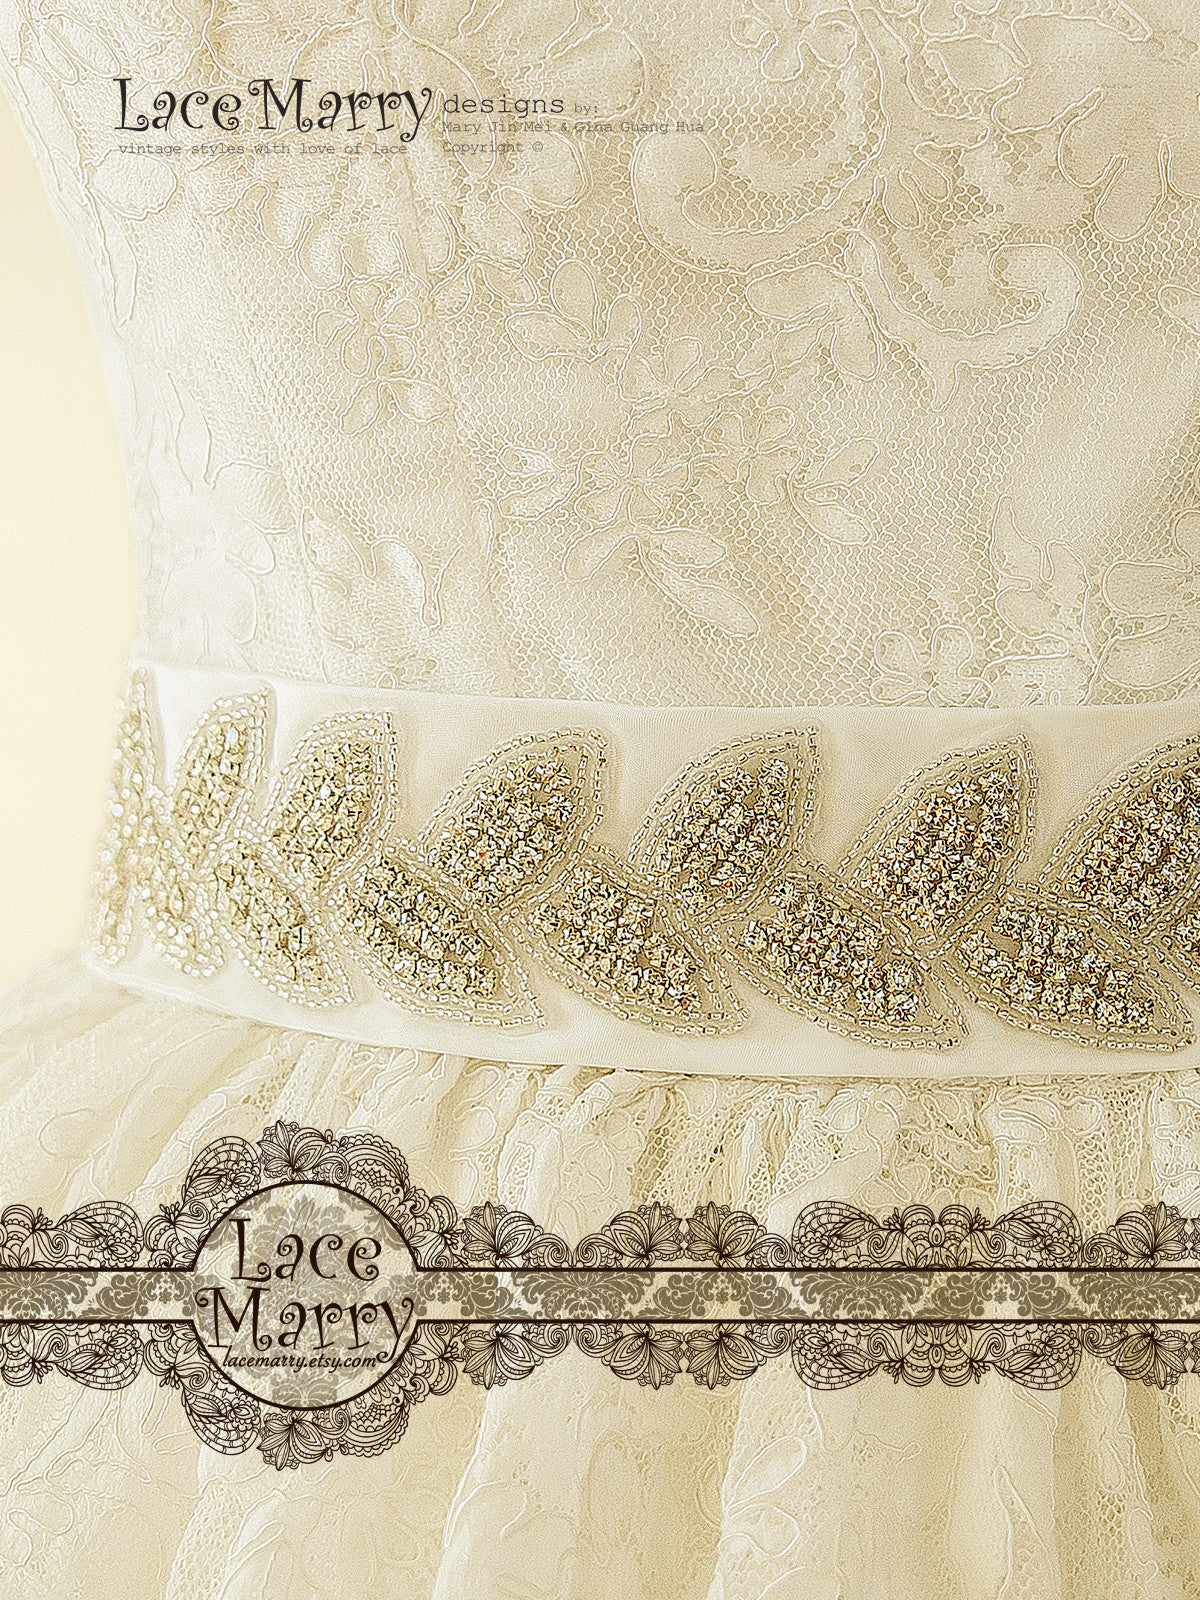 Beaded Embellishment Sash on Wedding Dress